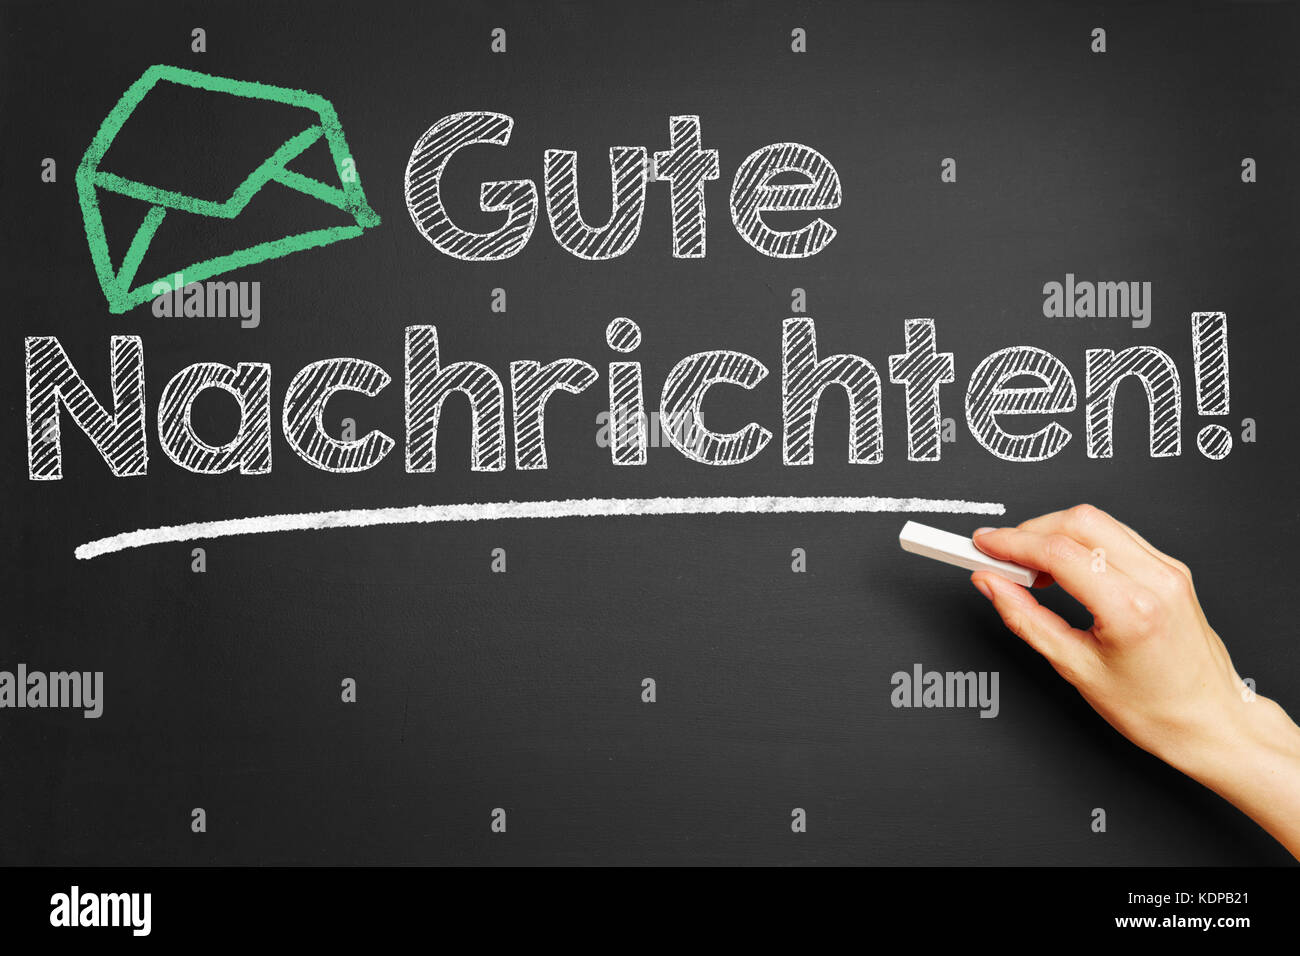 Gute Nachrichten (good news) or message with mail icon on blackboard Stock Photo